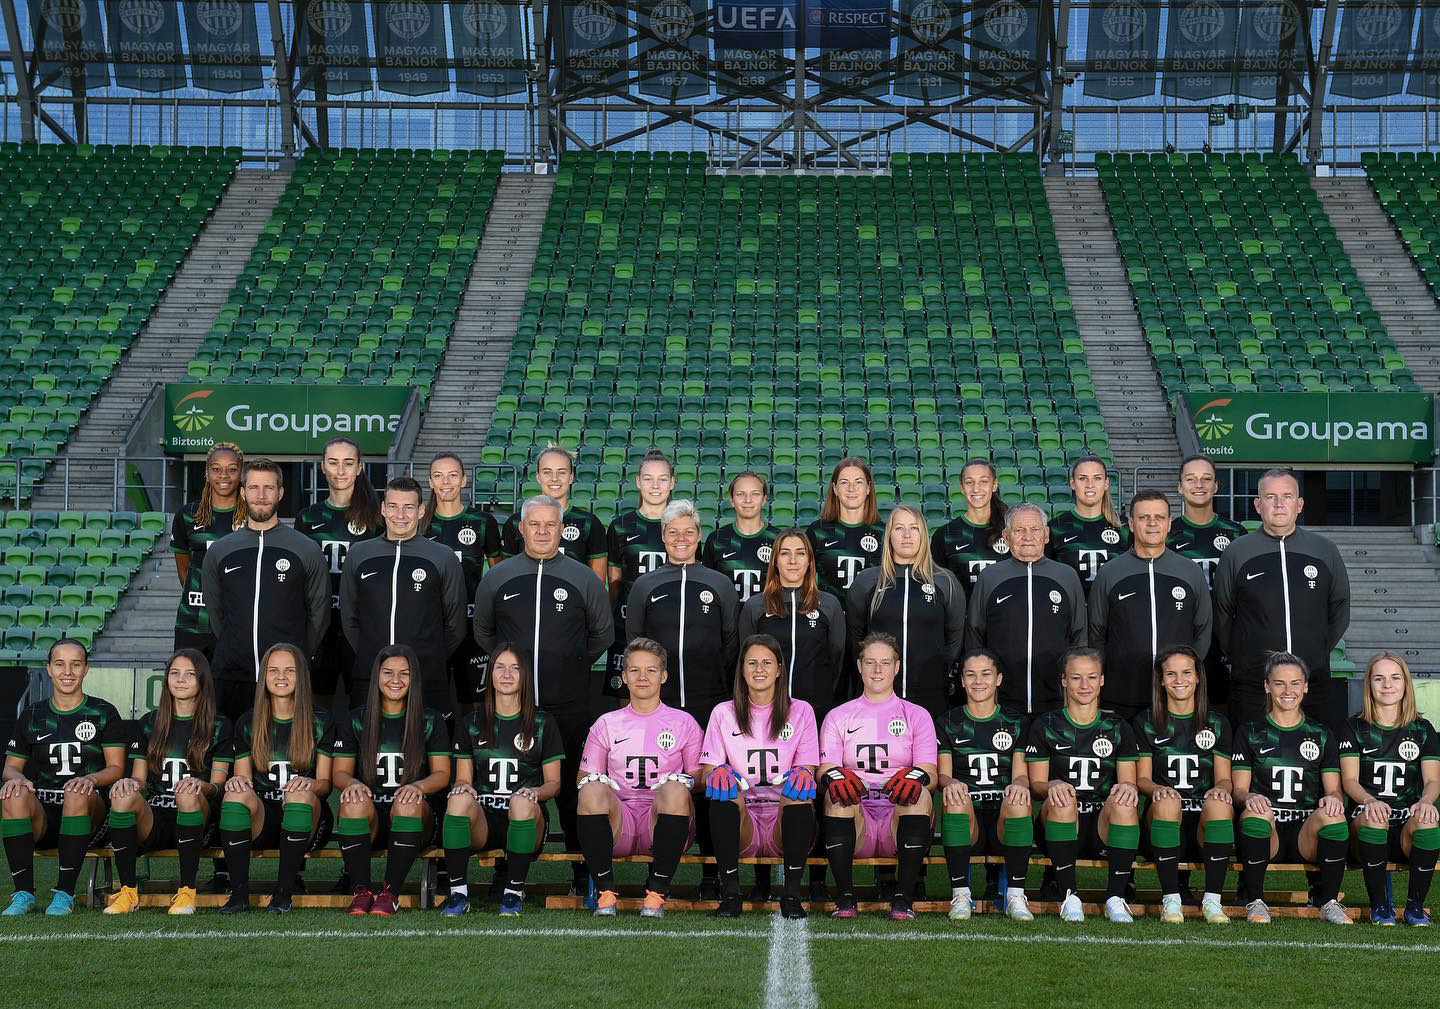 Ferencváros team for 2022 UEFA Women's Champions League qualifiers. (Ferencváros)